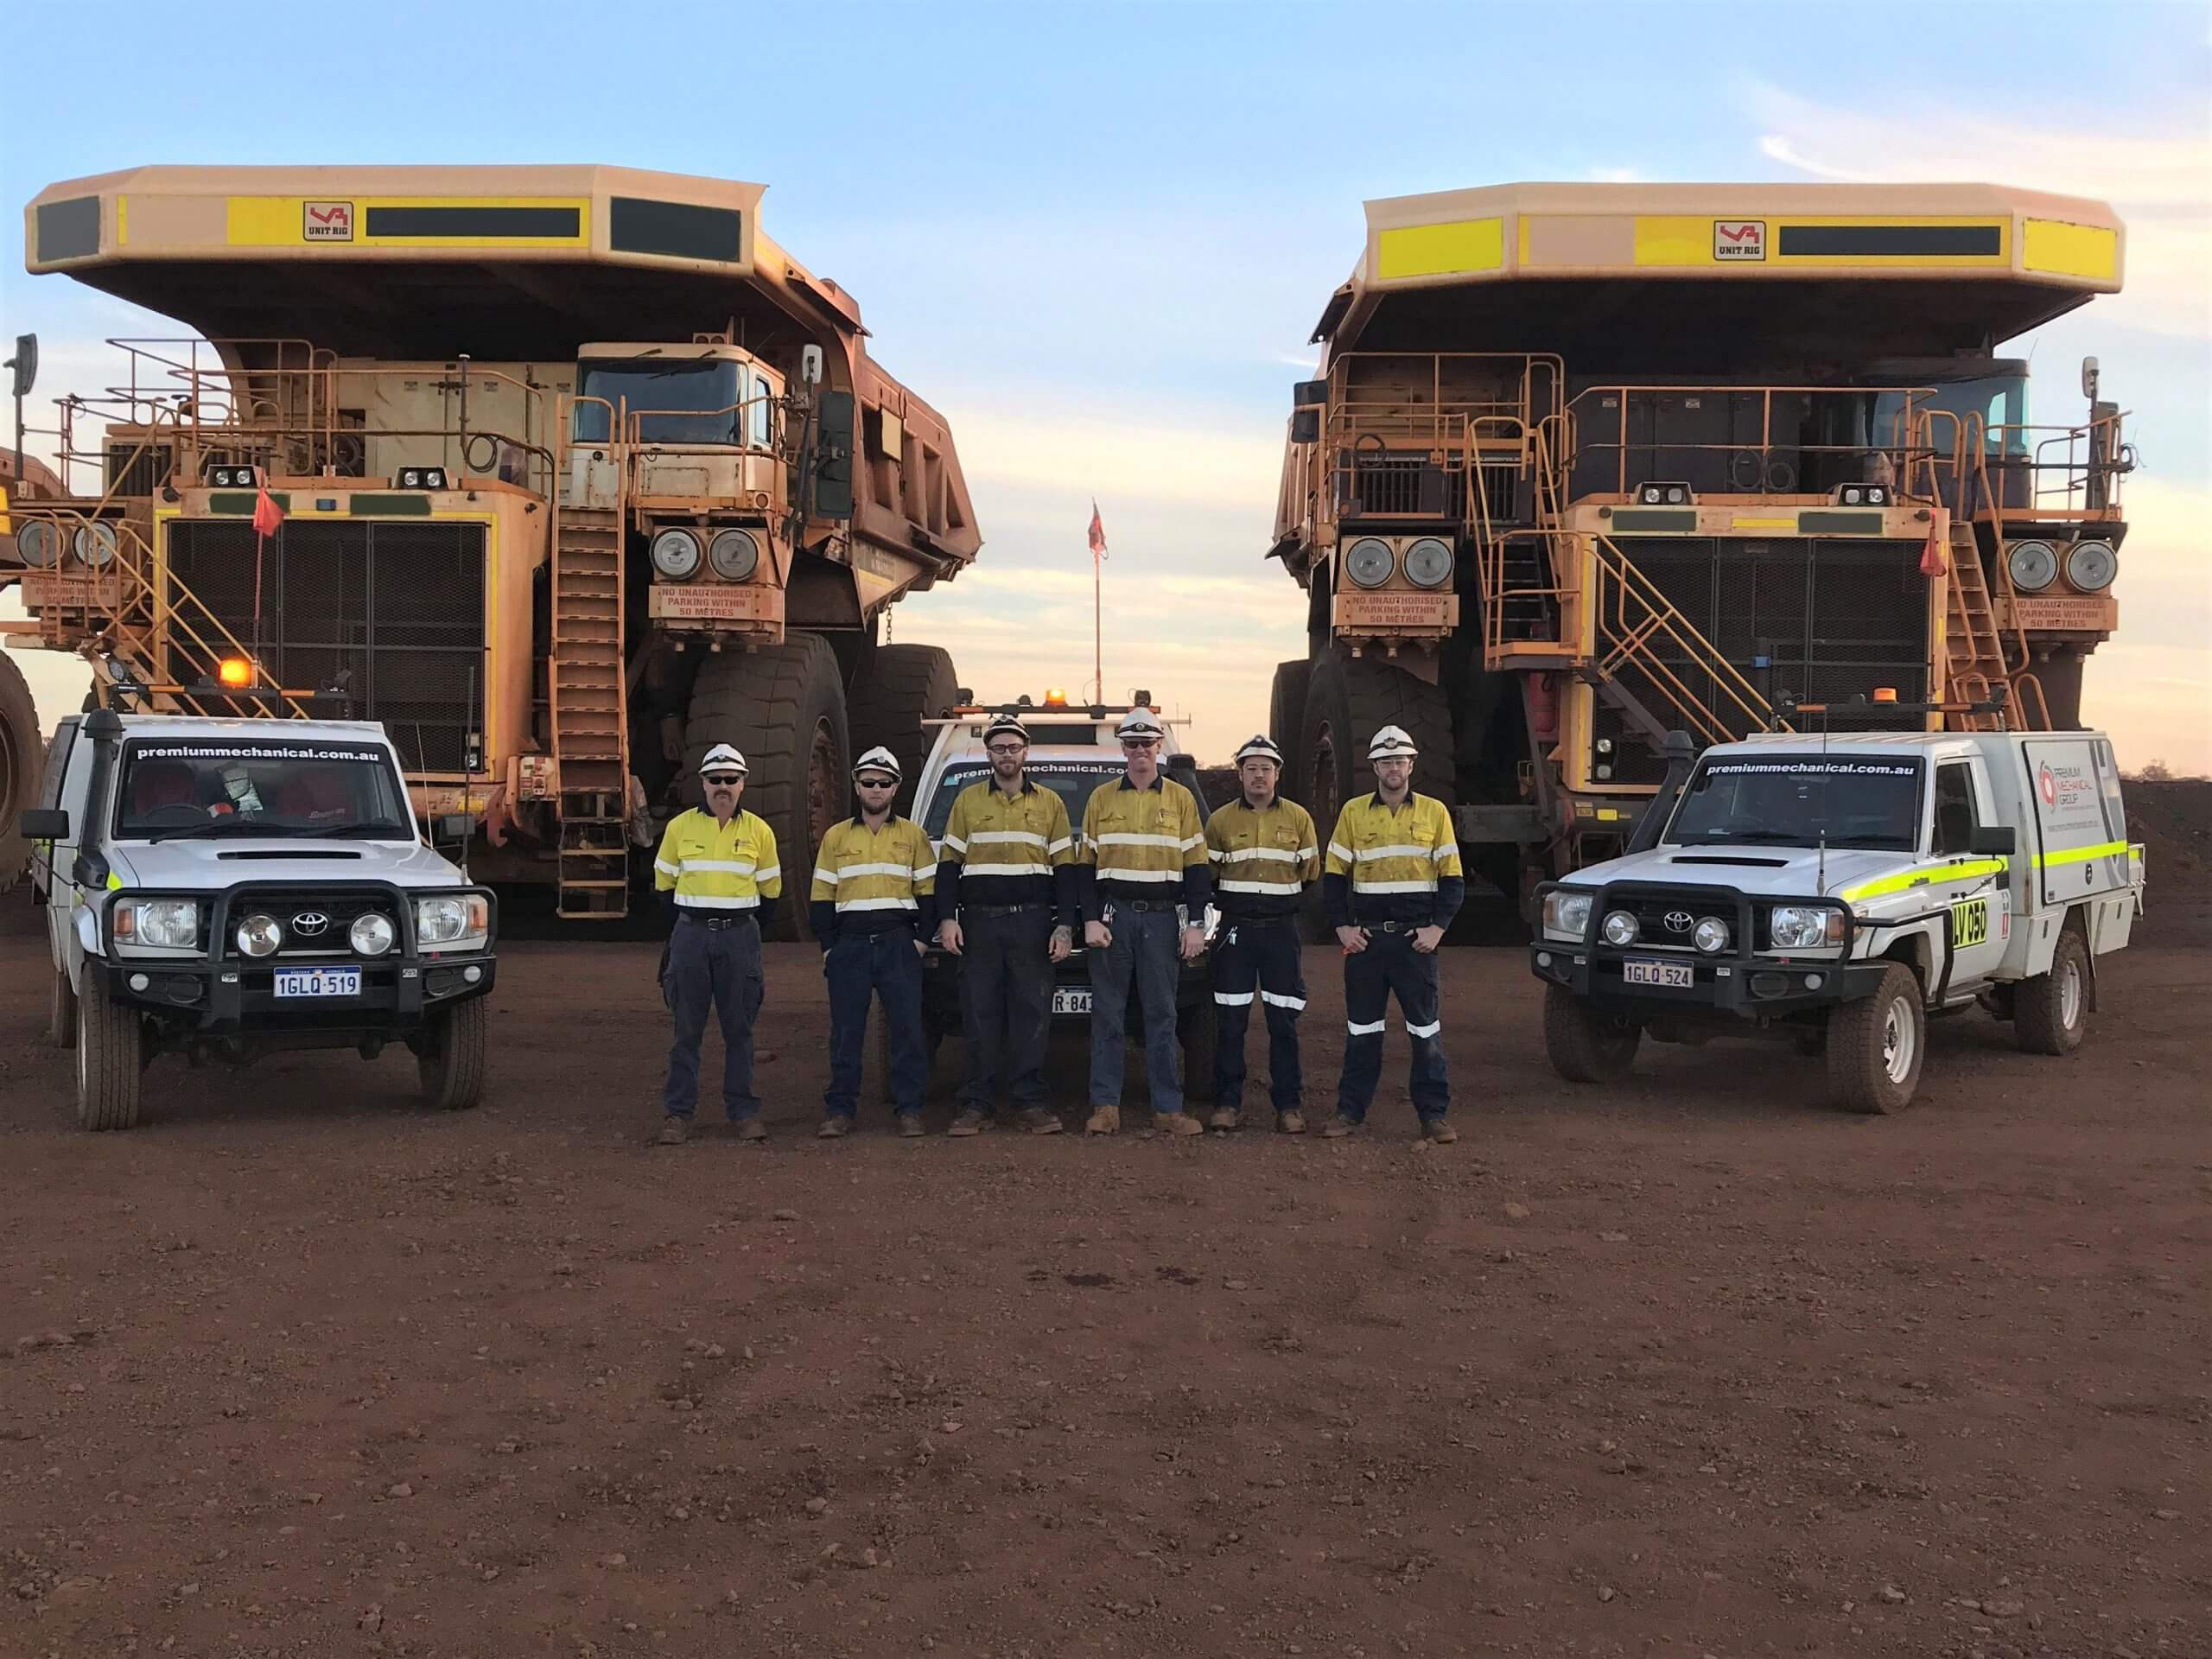 FIFO workers standing in front of diesel mining trucks.